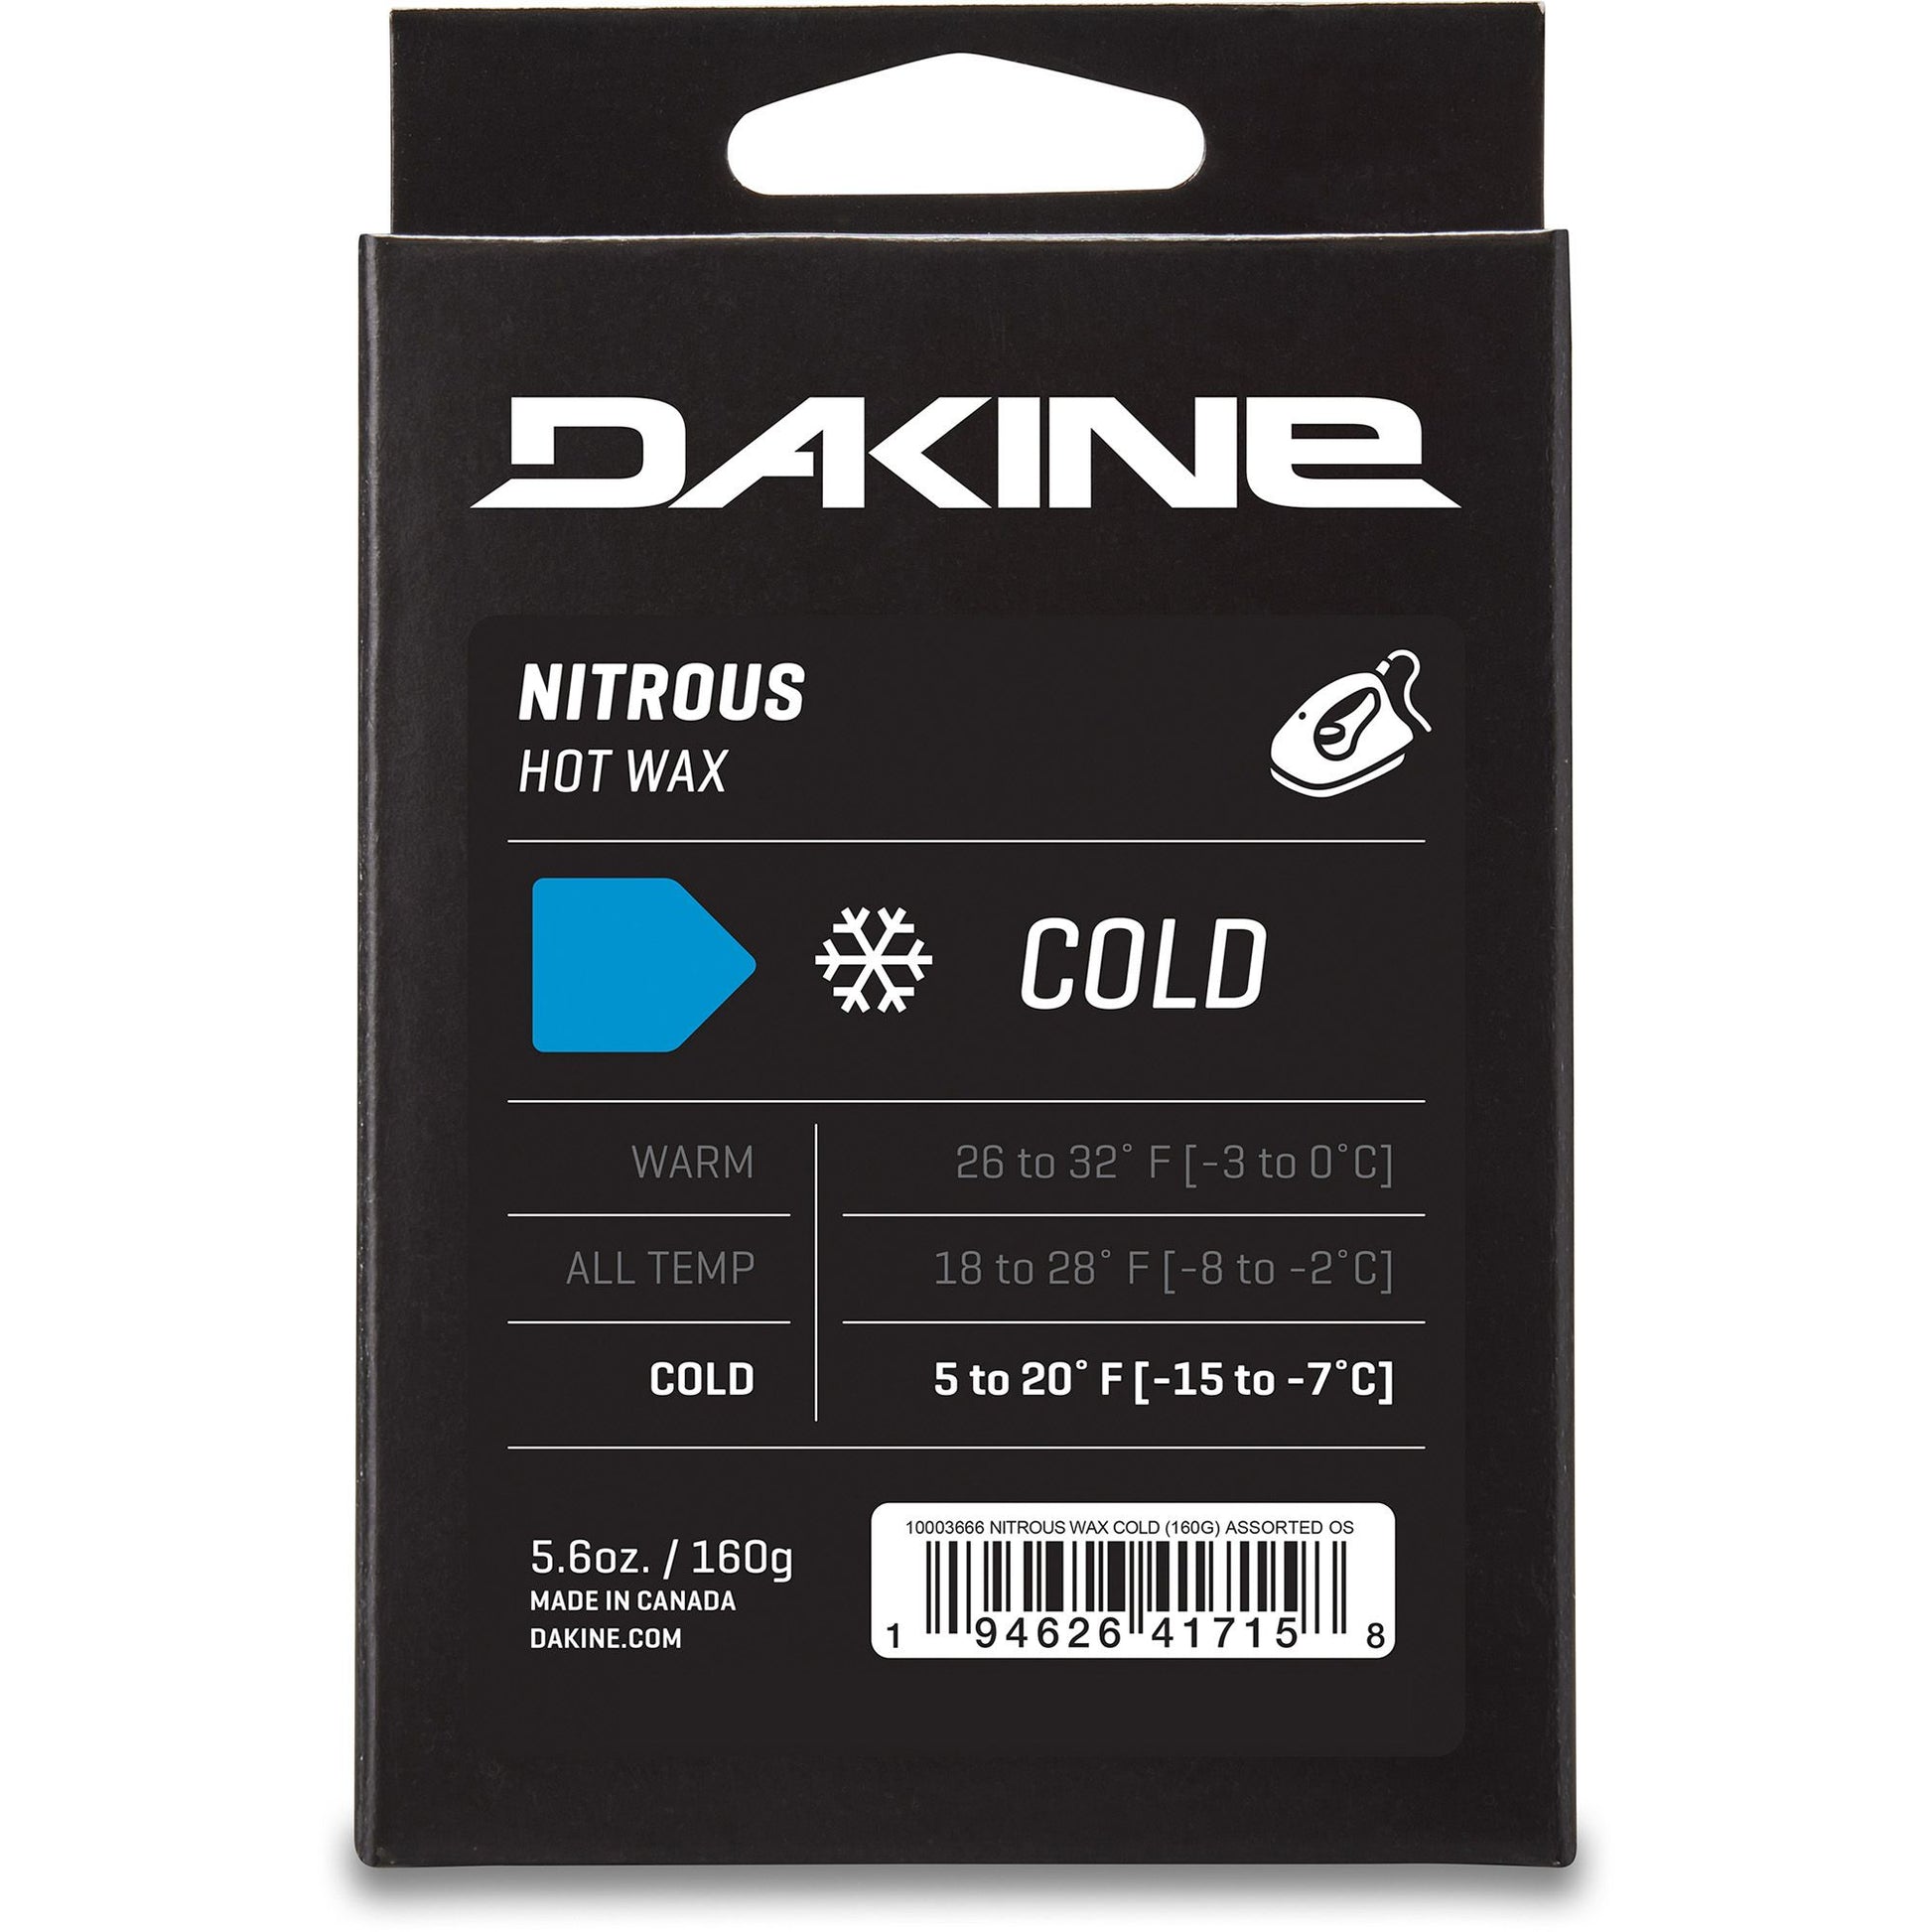 Dakine Nitrous Cold Wax 160g Multicolor OS Wax